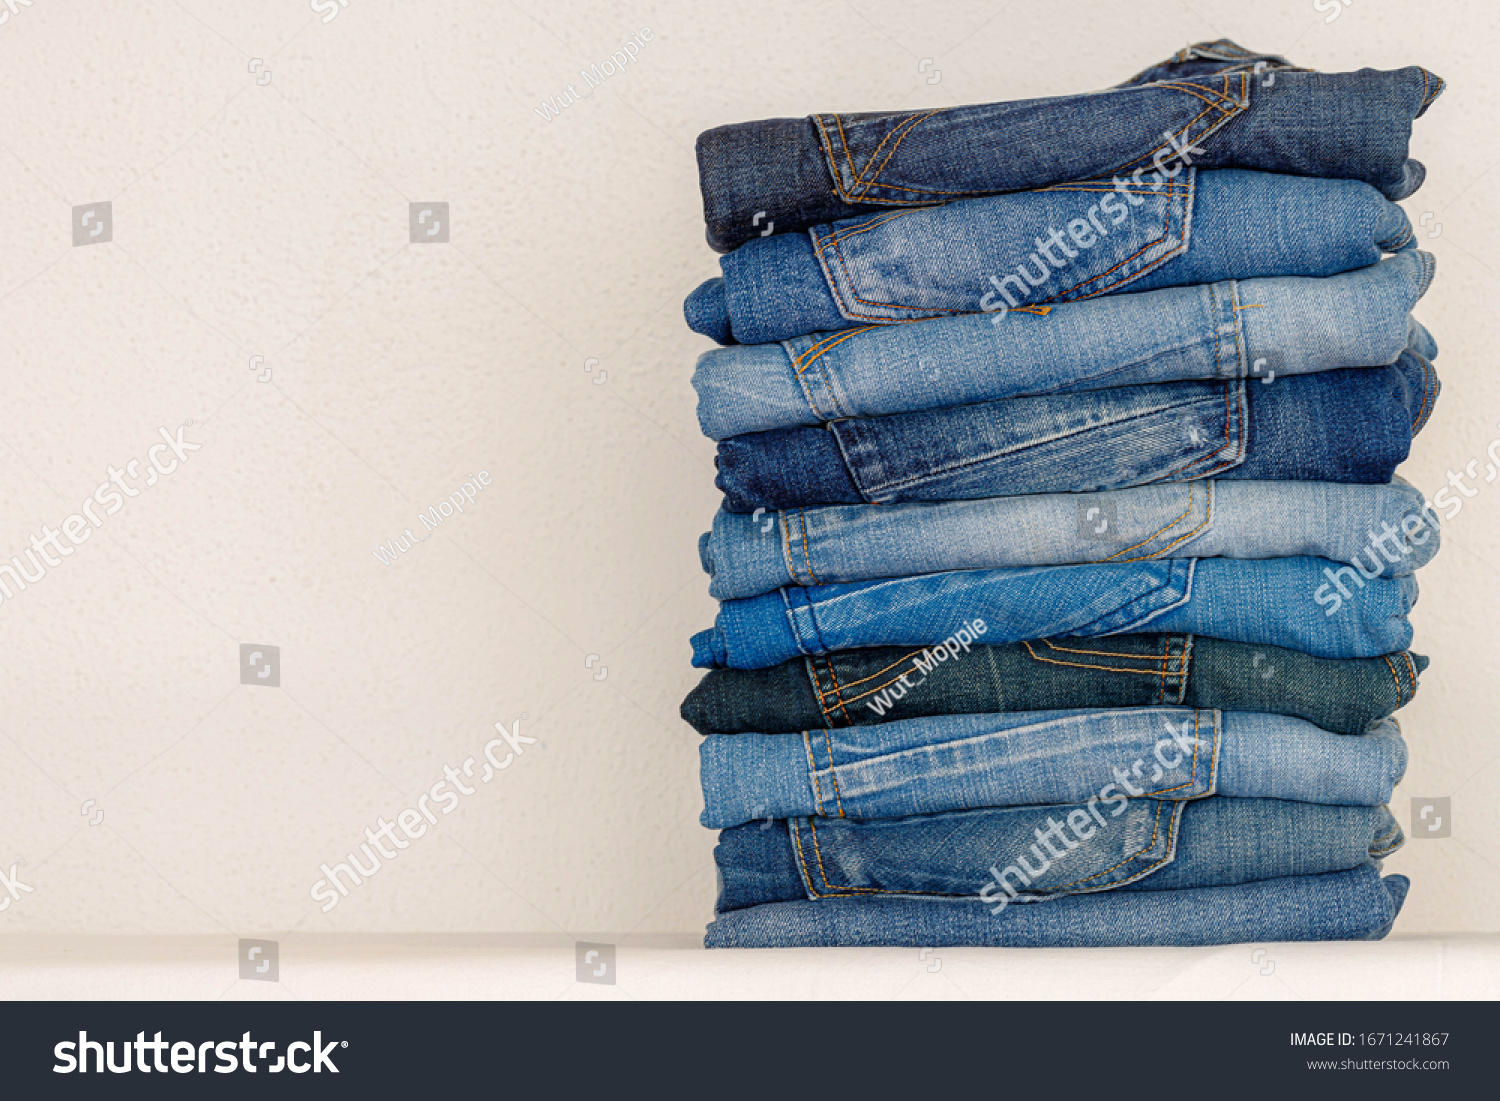 2,110 Sweater jeans piles Images, Stock Photos & Vectors | Shutterstock